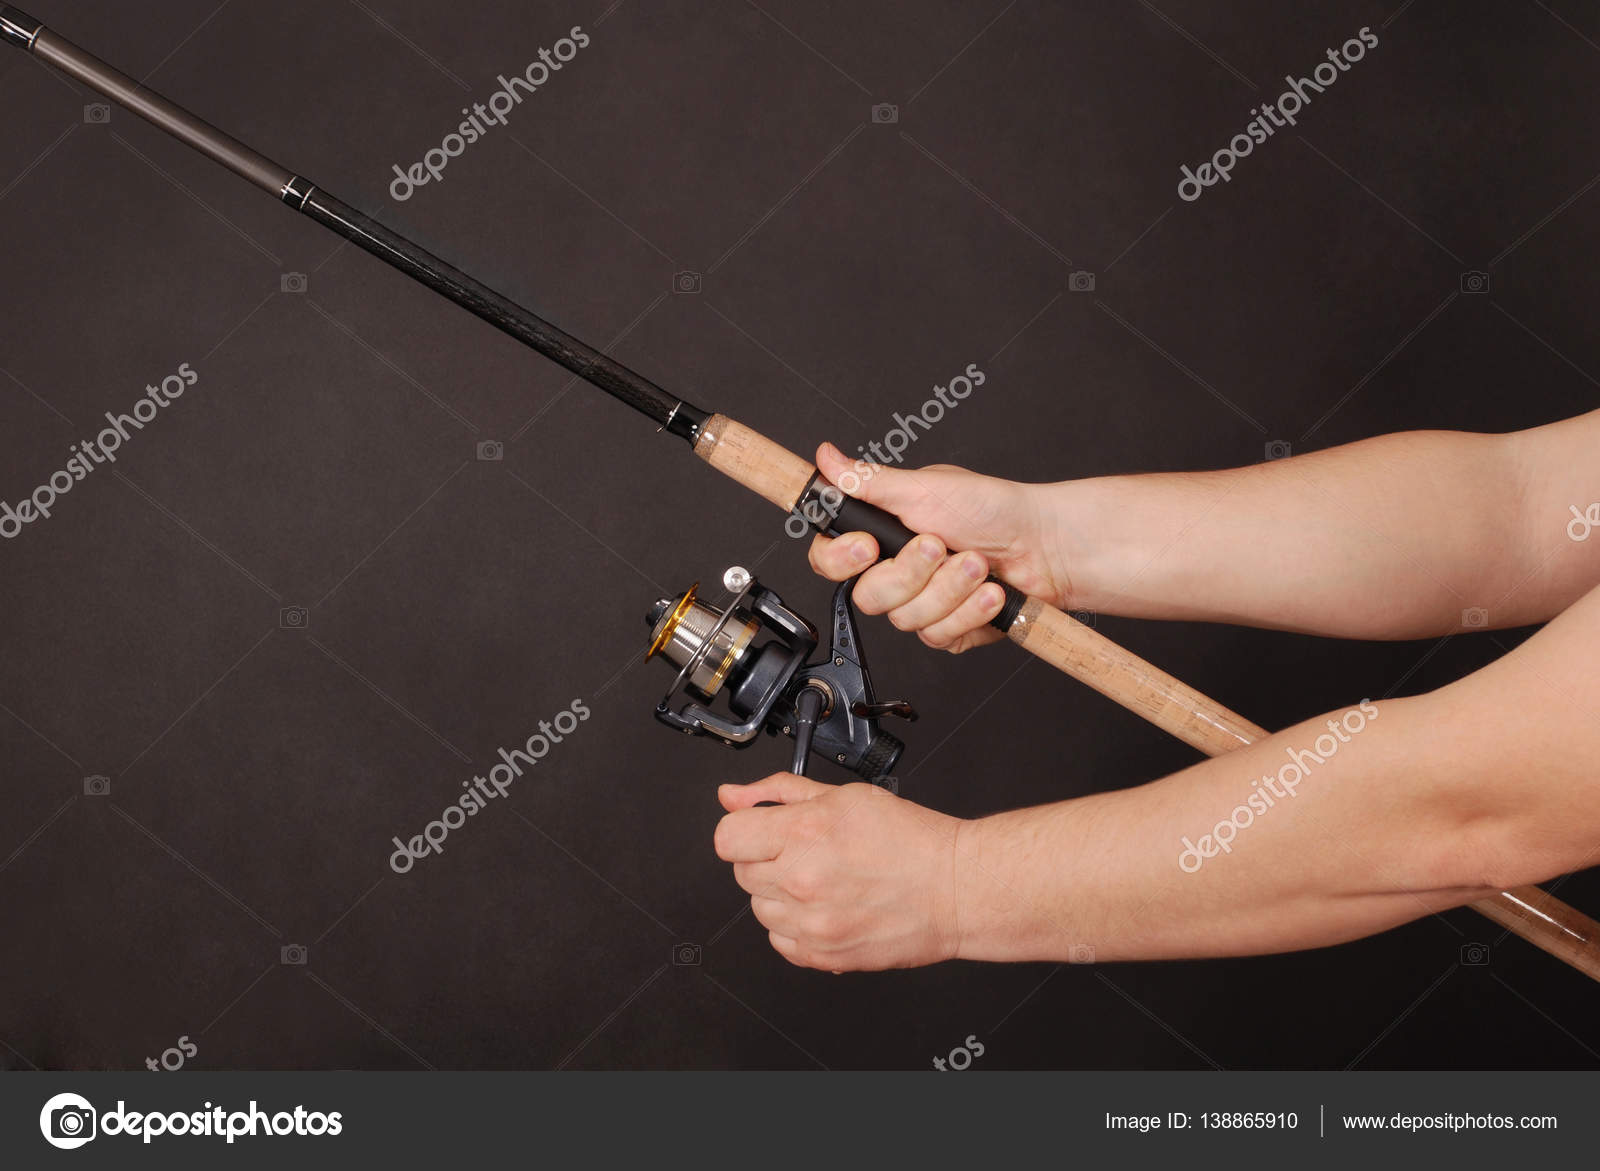 https://st3.depositphotos.com/1001735/13886/i/1600/depositphotos_138865910-stock-photo-hand-holding-a-fishing-rod.jpg